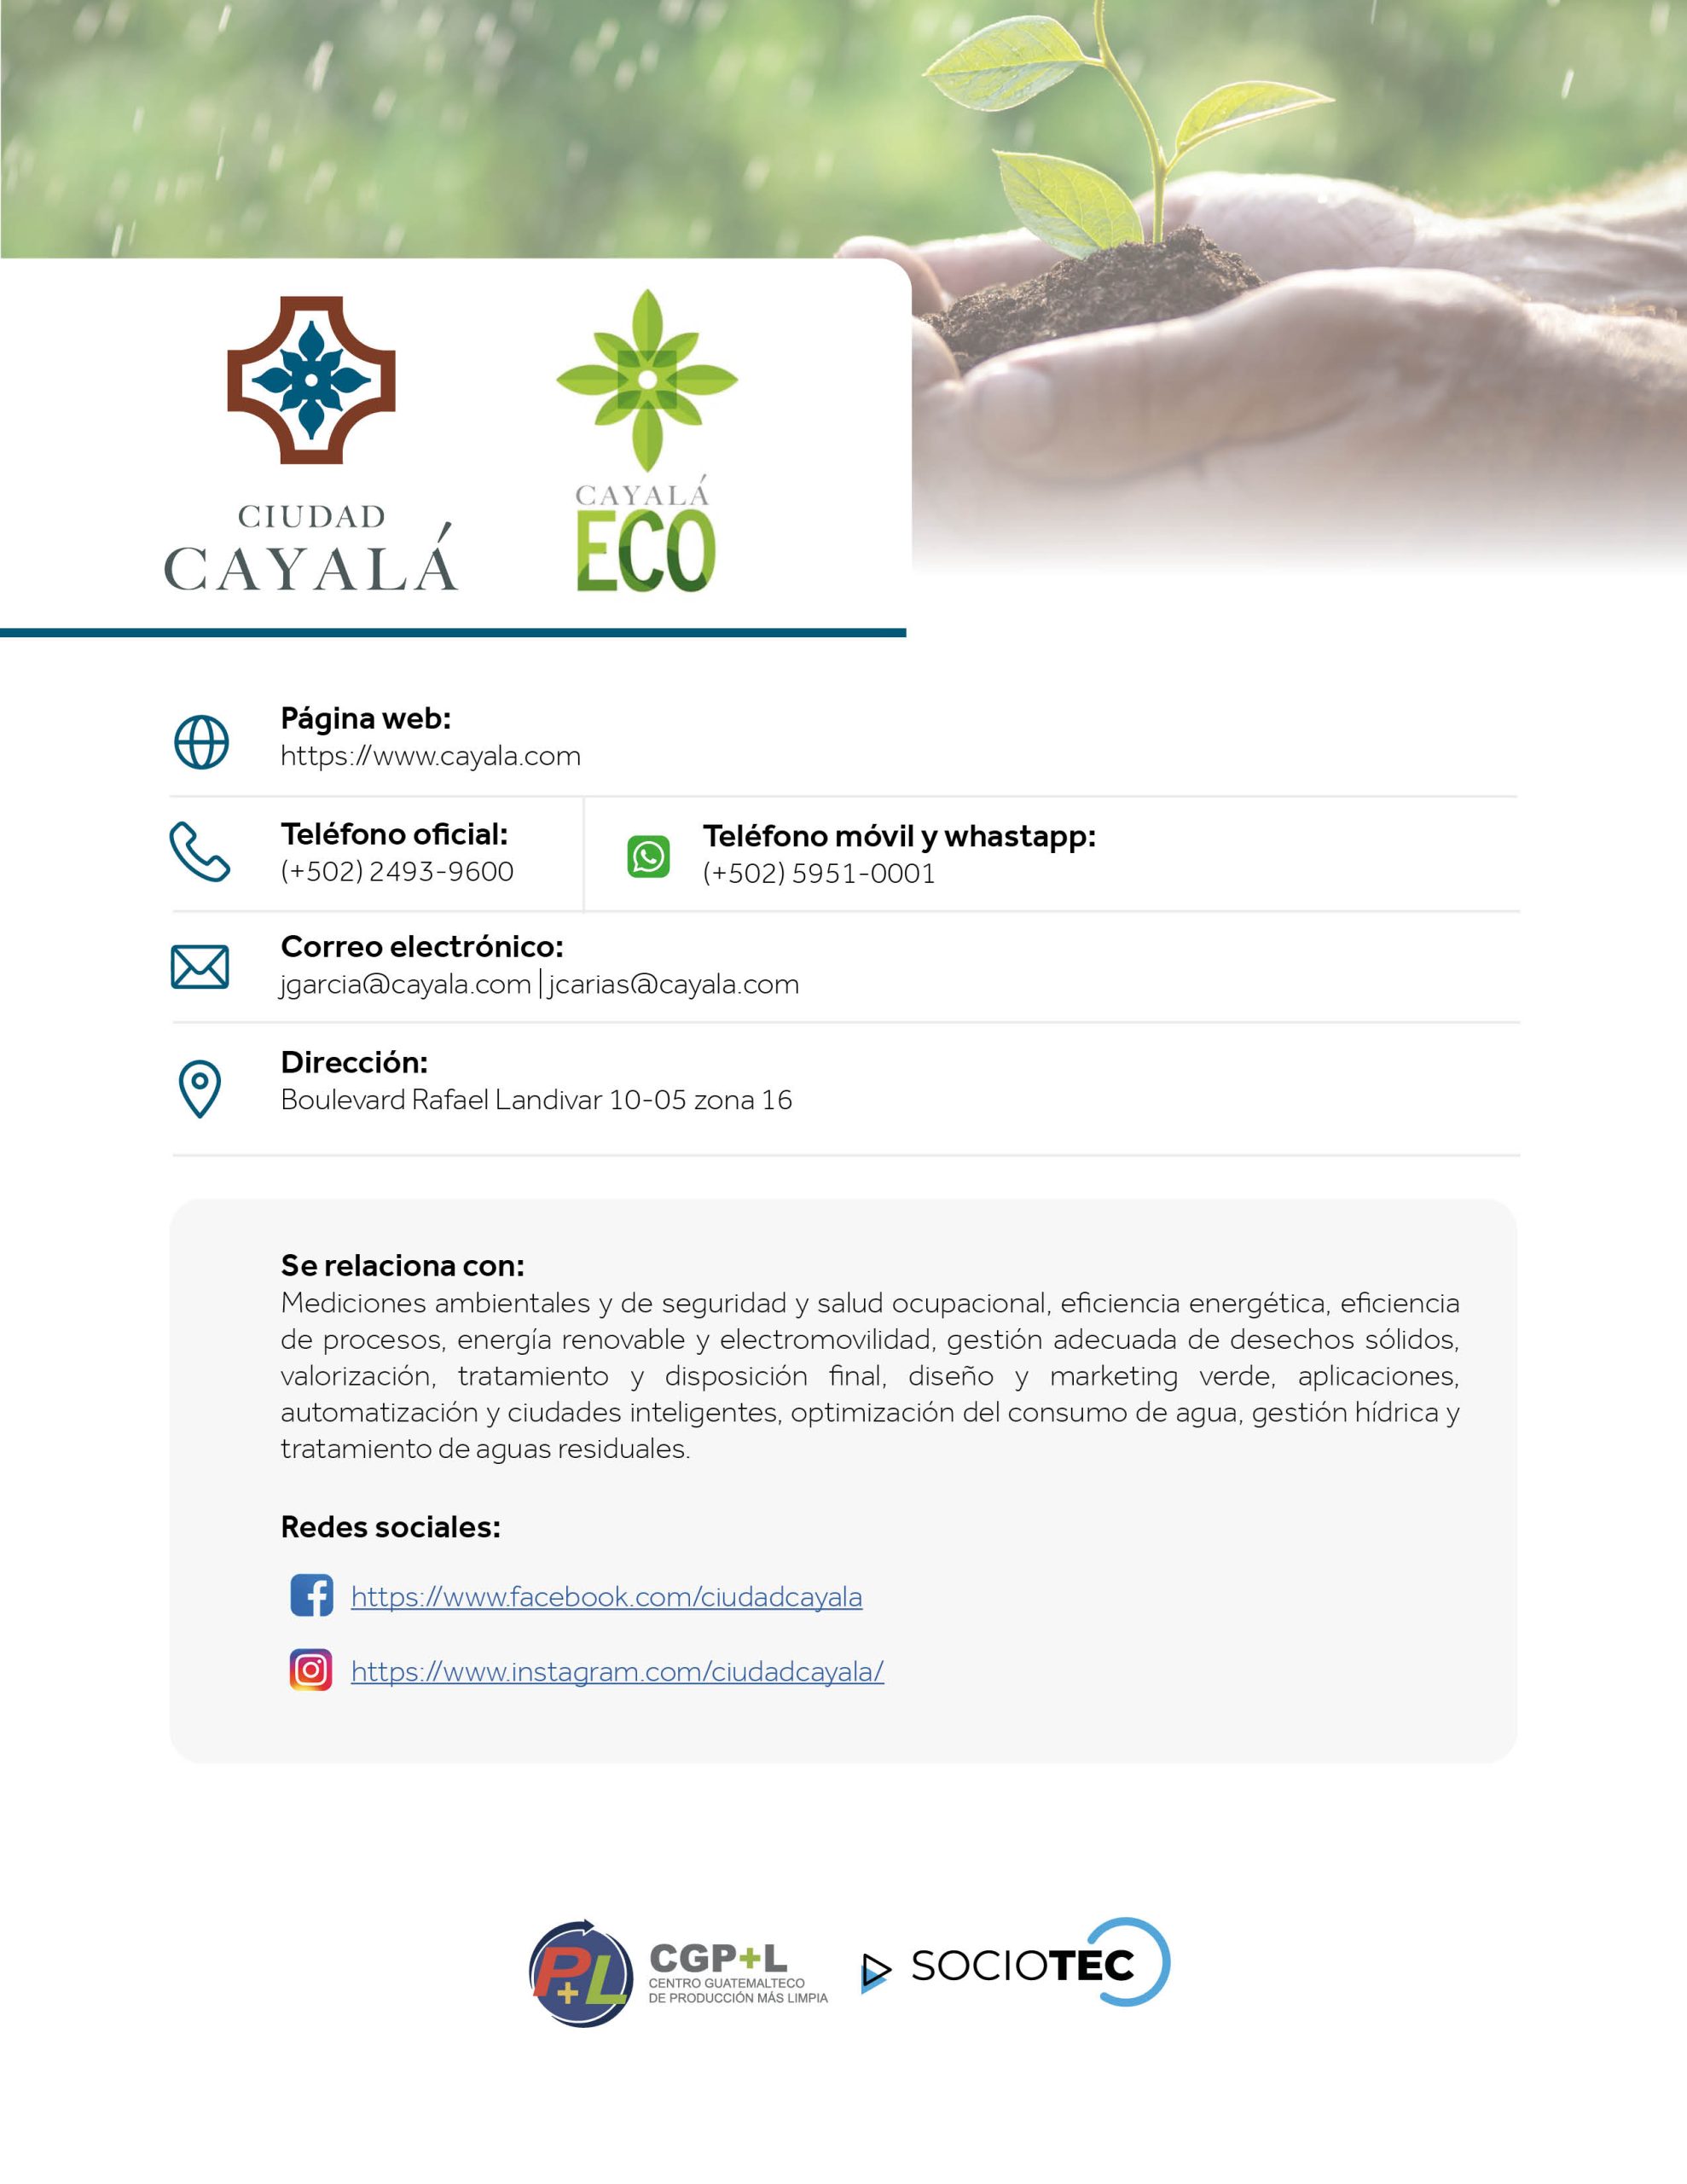 CatálogoSociosTec_Cayalá Eco